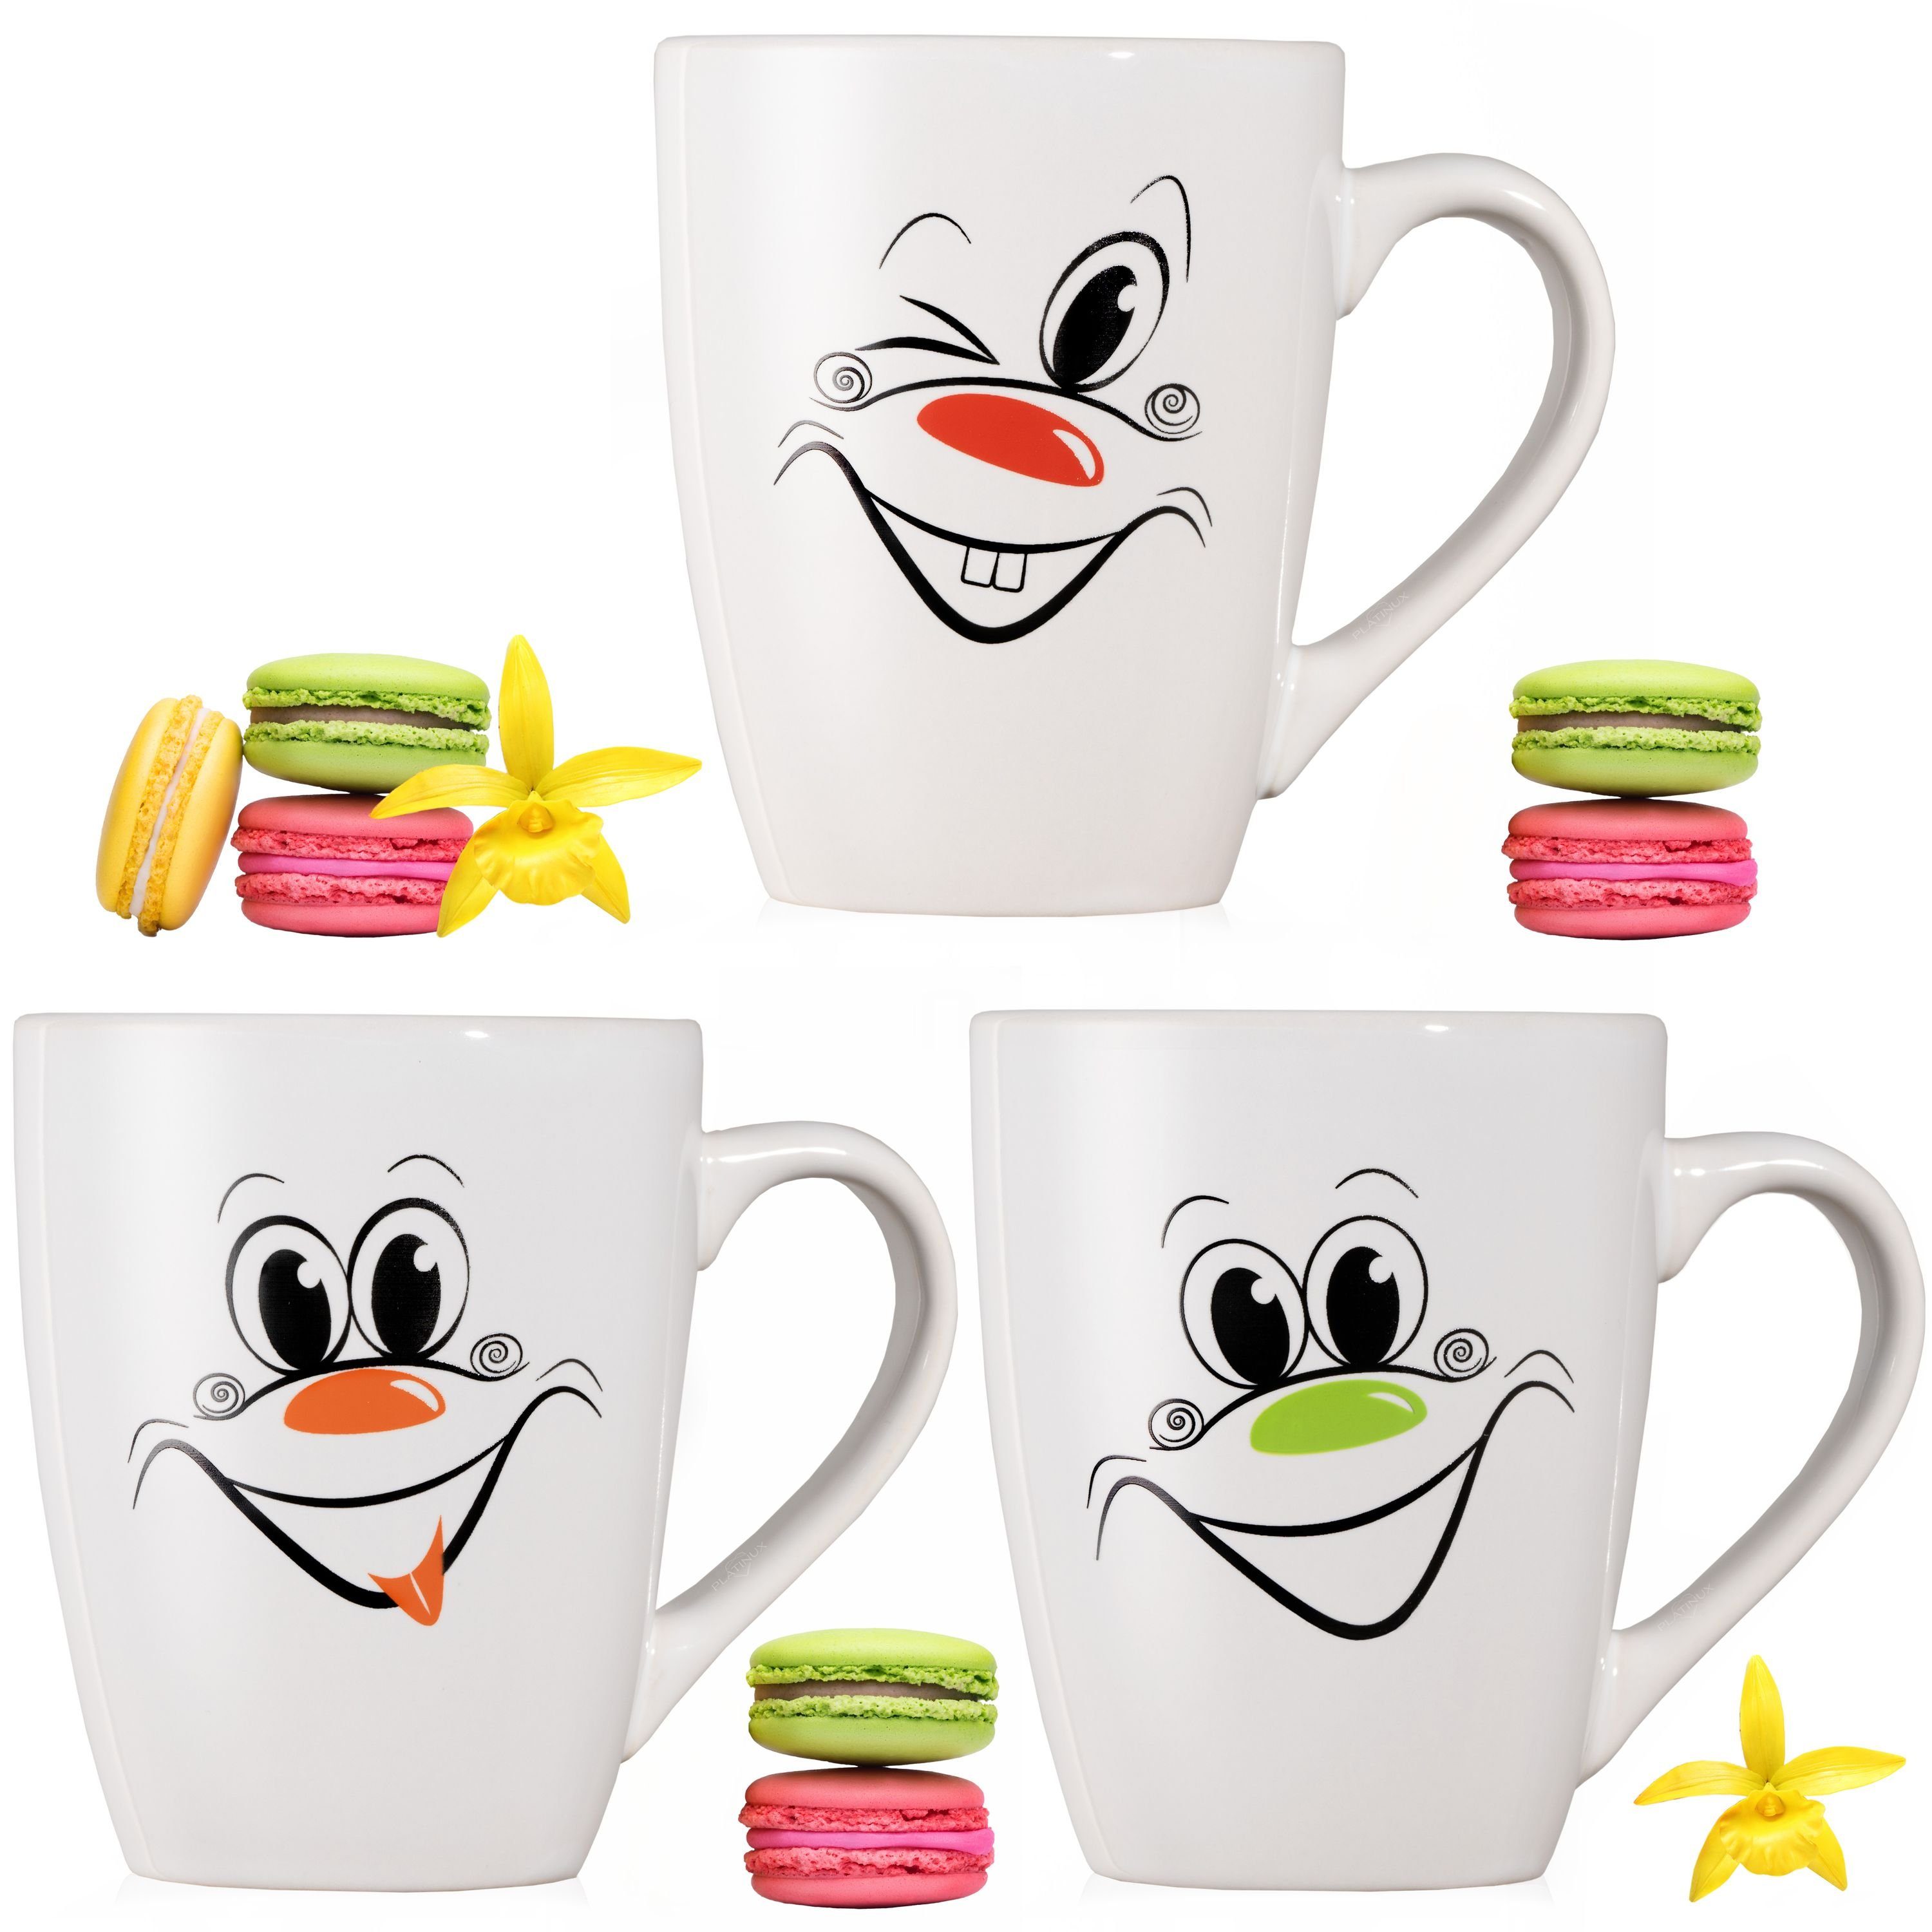 Teebecher Kaffeetassen, 250ml Karneval Keramik, Lustig PLATINUX Set Kaffeebecher Tasse Gesichter Teetasse Lustige Motiv mit